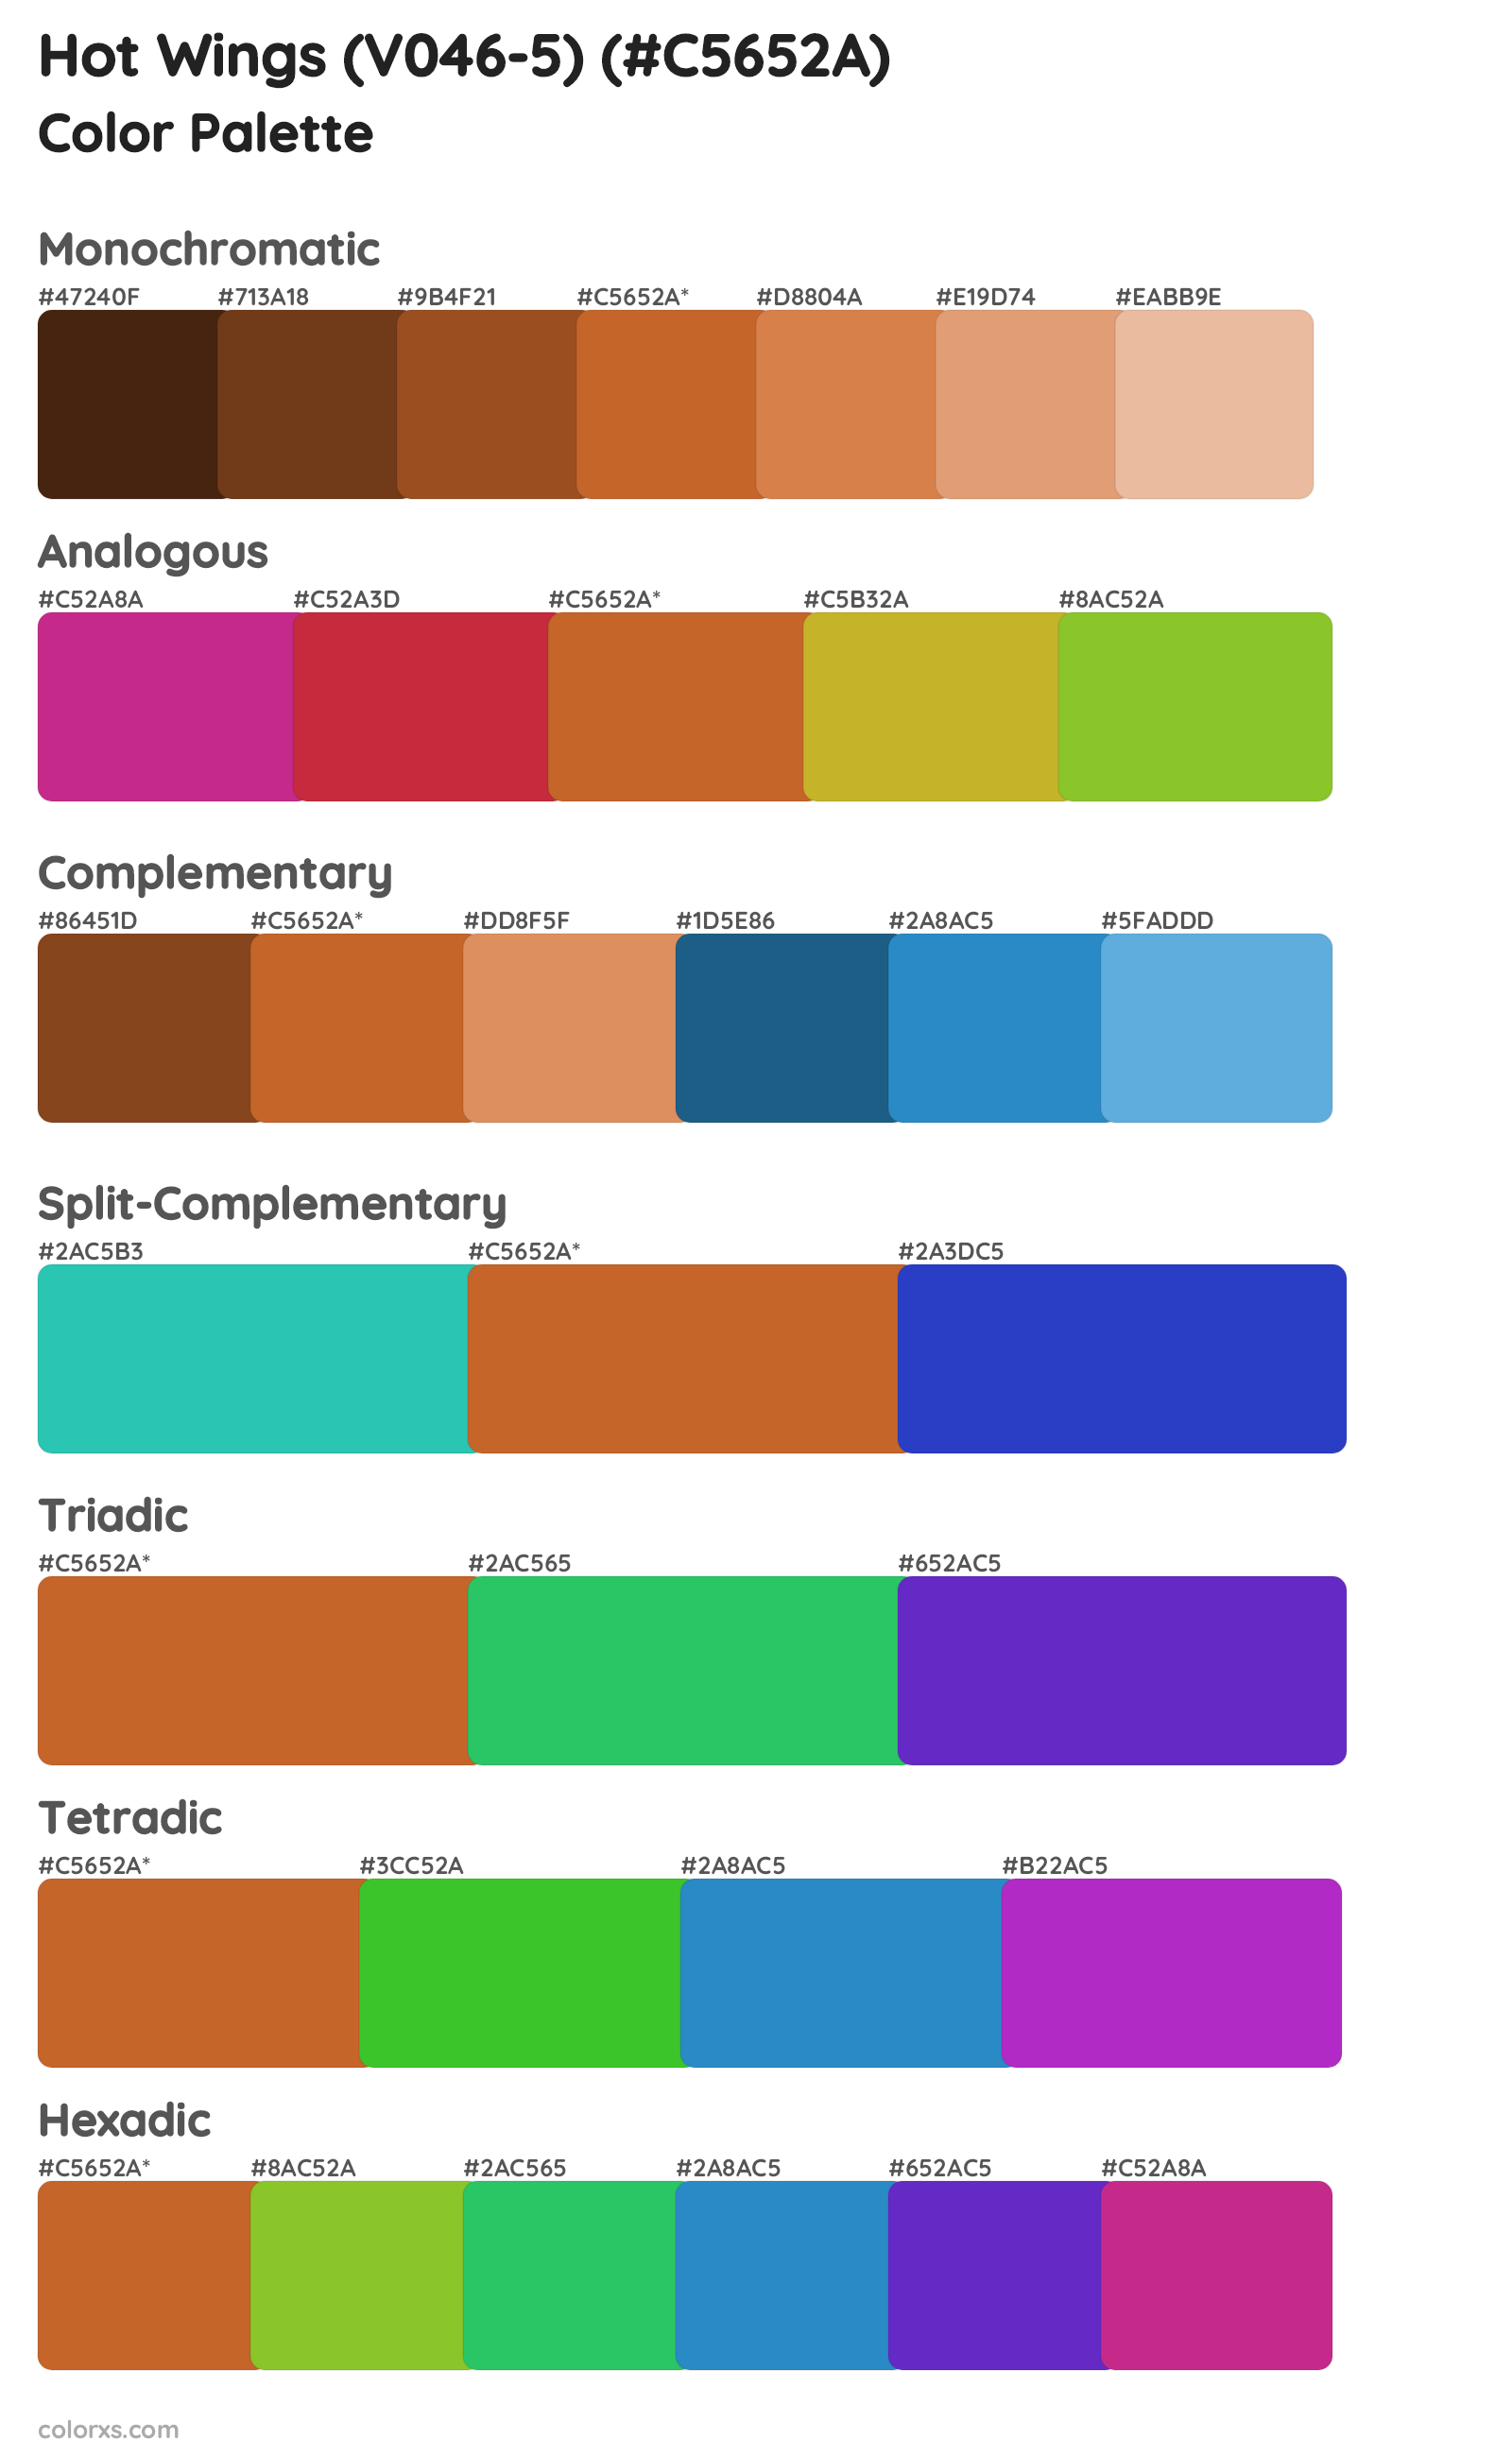 Hot Wings (V046-5) Color Scheme Palettes